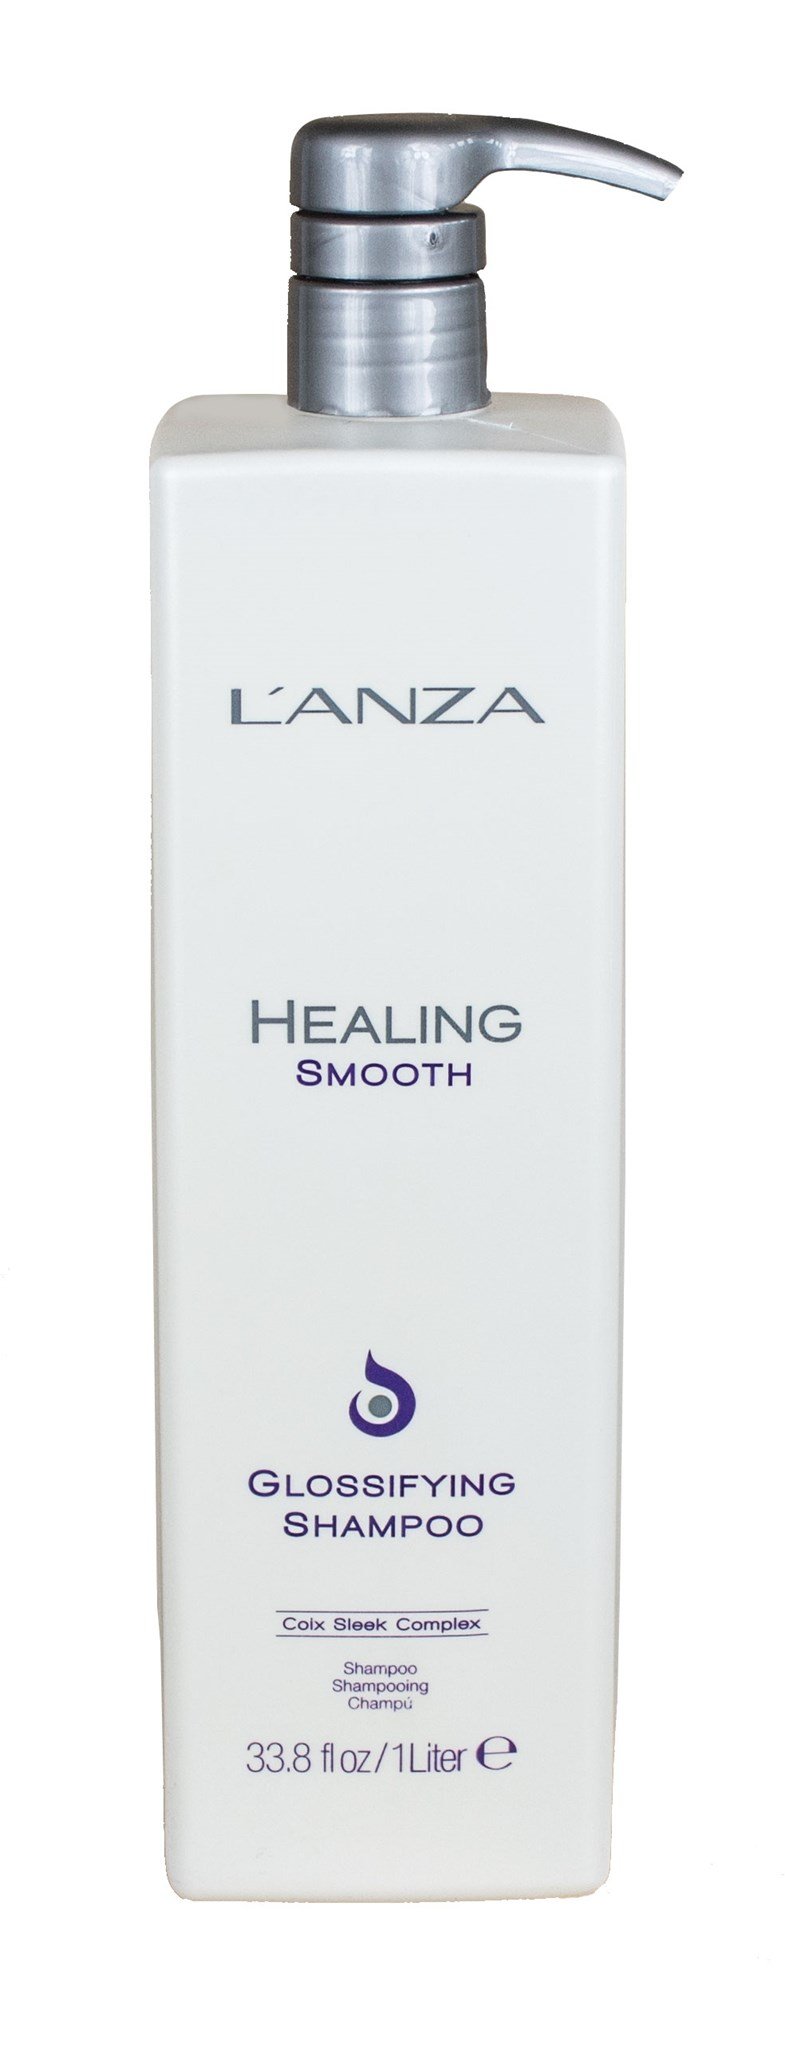 Lanza Healing Smooth Glossifying Shampoo Ltr